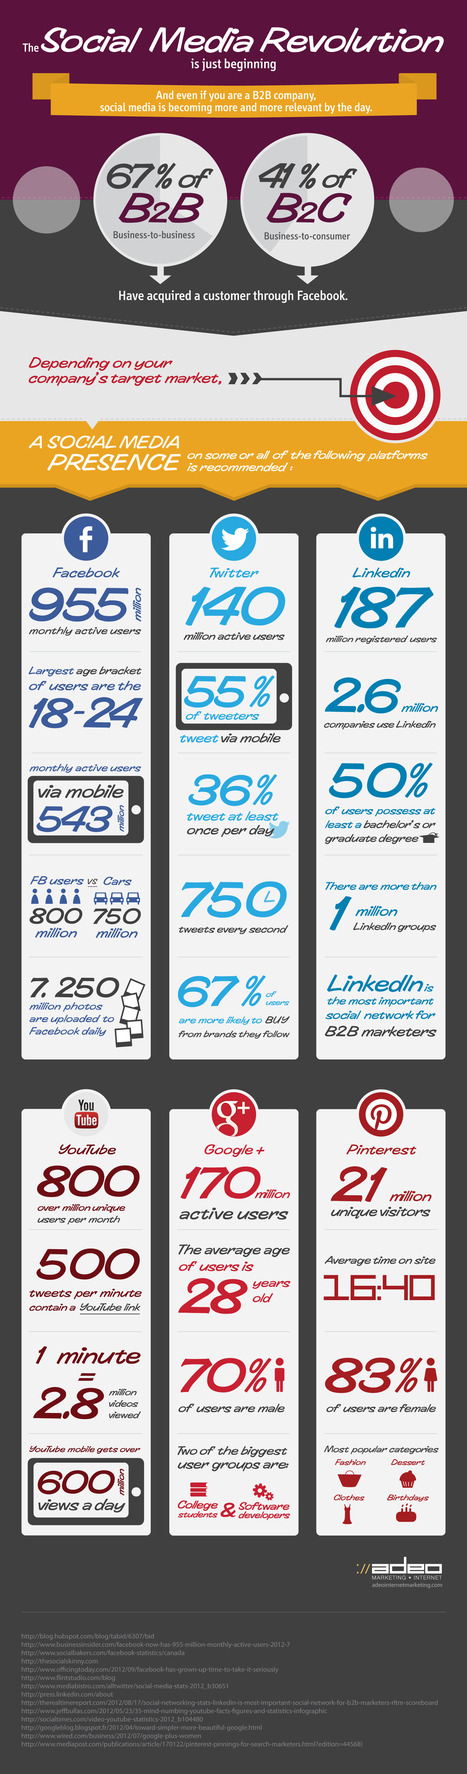 Social Media Revolution Revitalizing Modern Business (infographic) | Business Improvement and Social media | Scoop.it